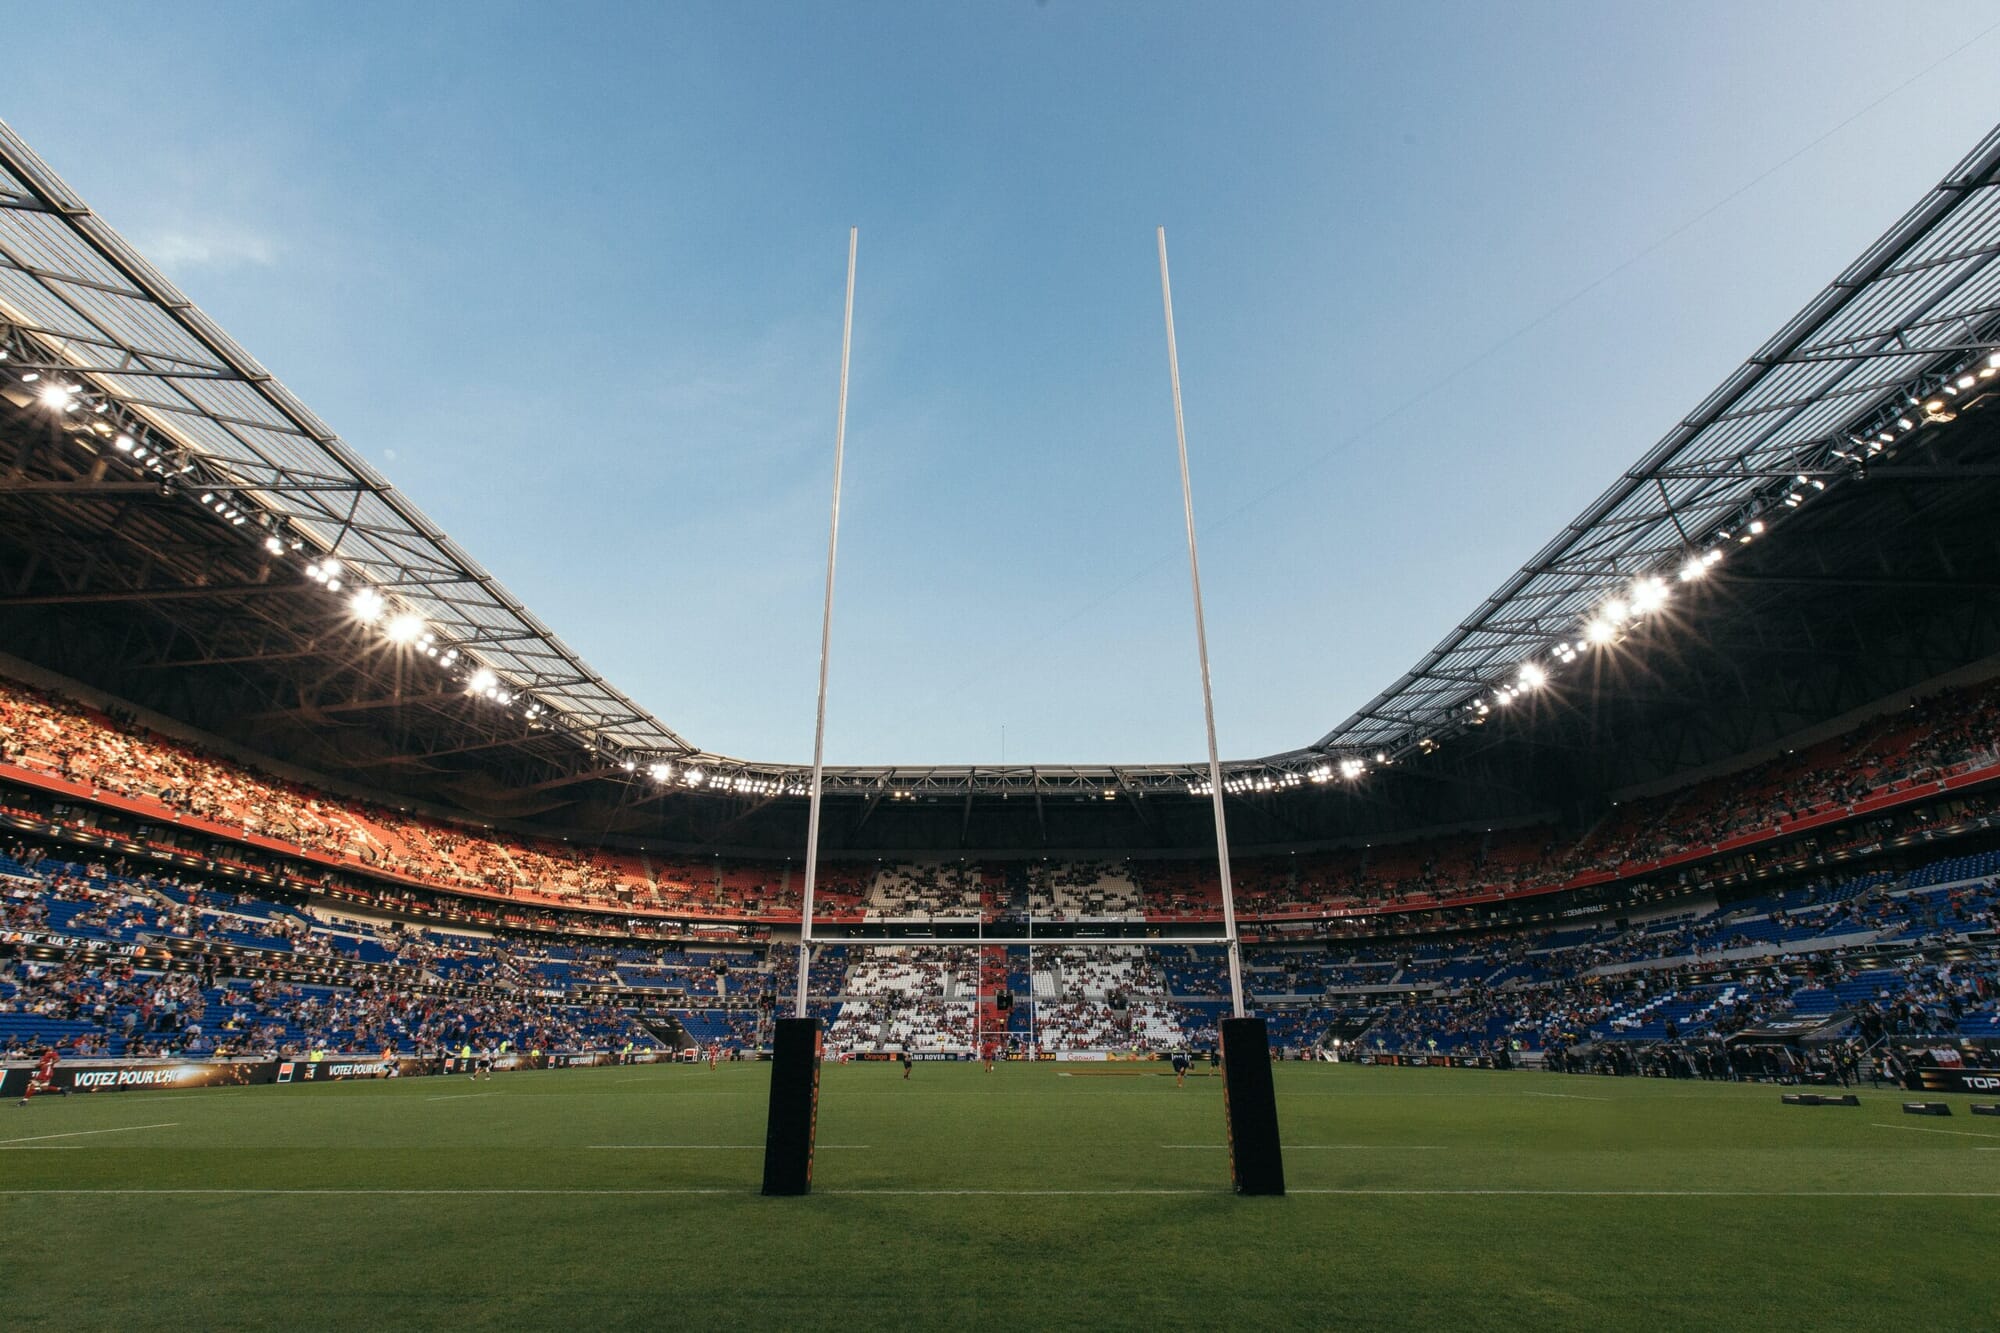 rugby-stadium-scaled.jpg?w=2000&h=1333&scale